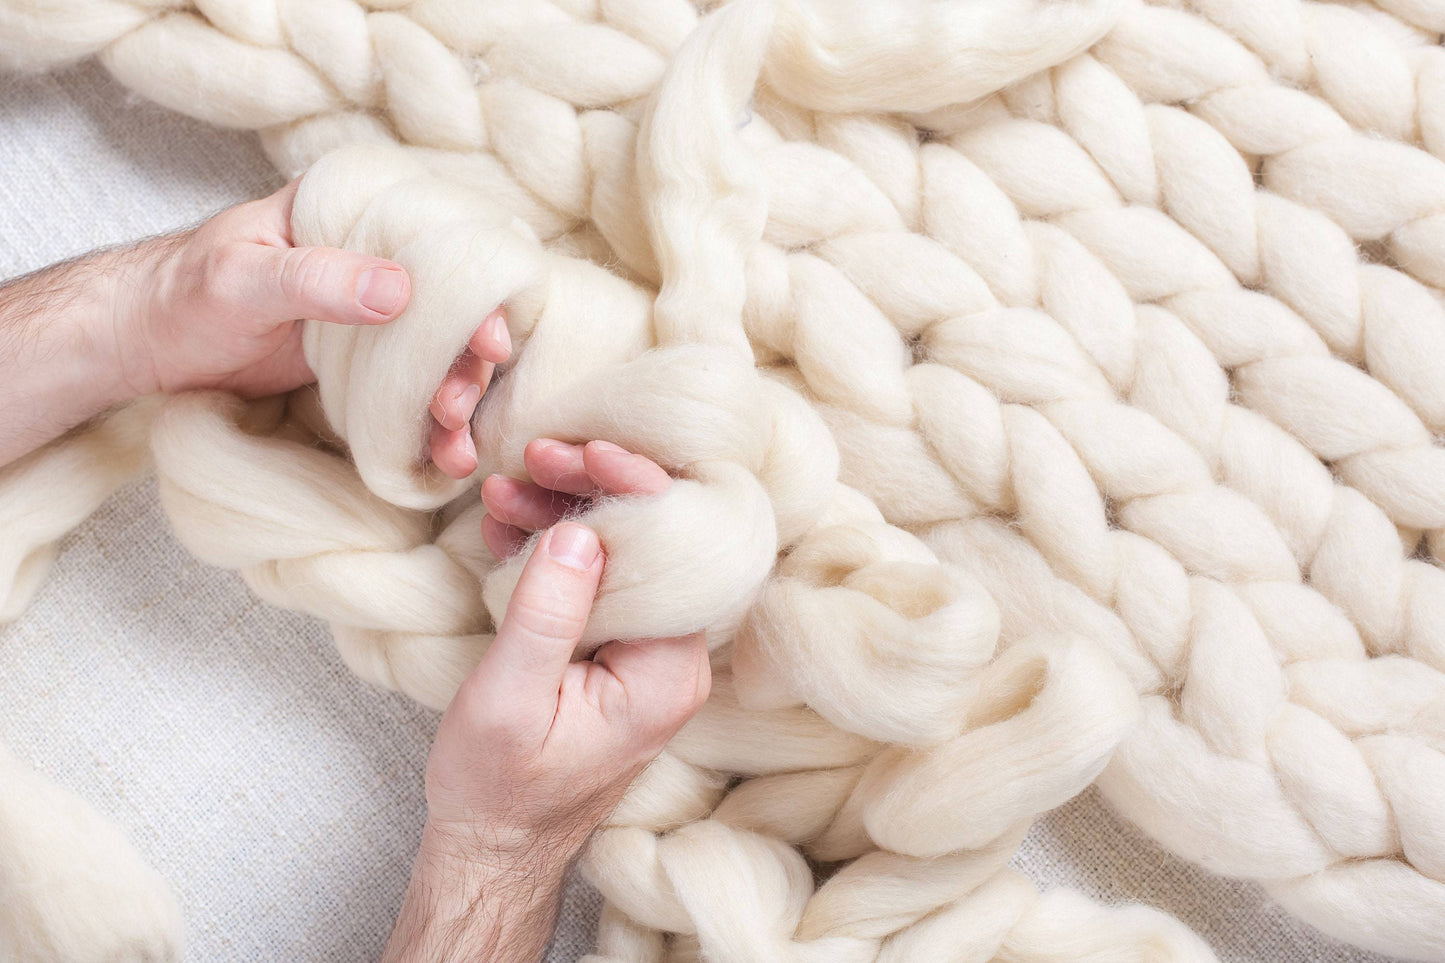 Wholesale Wool Roving, 30lbs Roll Natural White Wool Top Fiber Spinning, Felting, Knitting, Weaving Wool supplies Wool Bump Wool Supplier